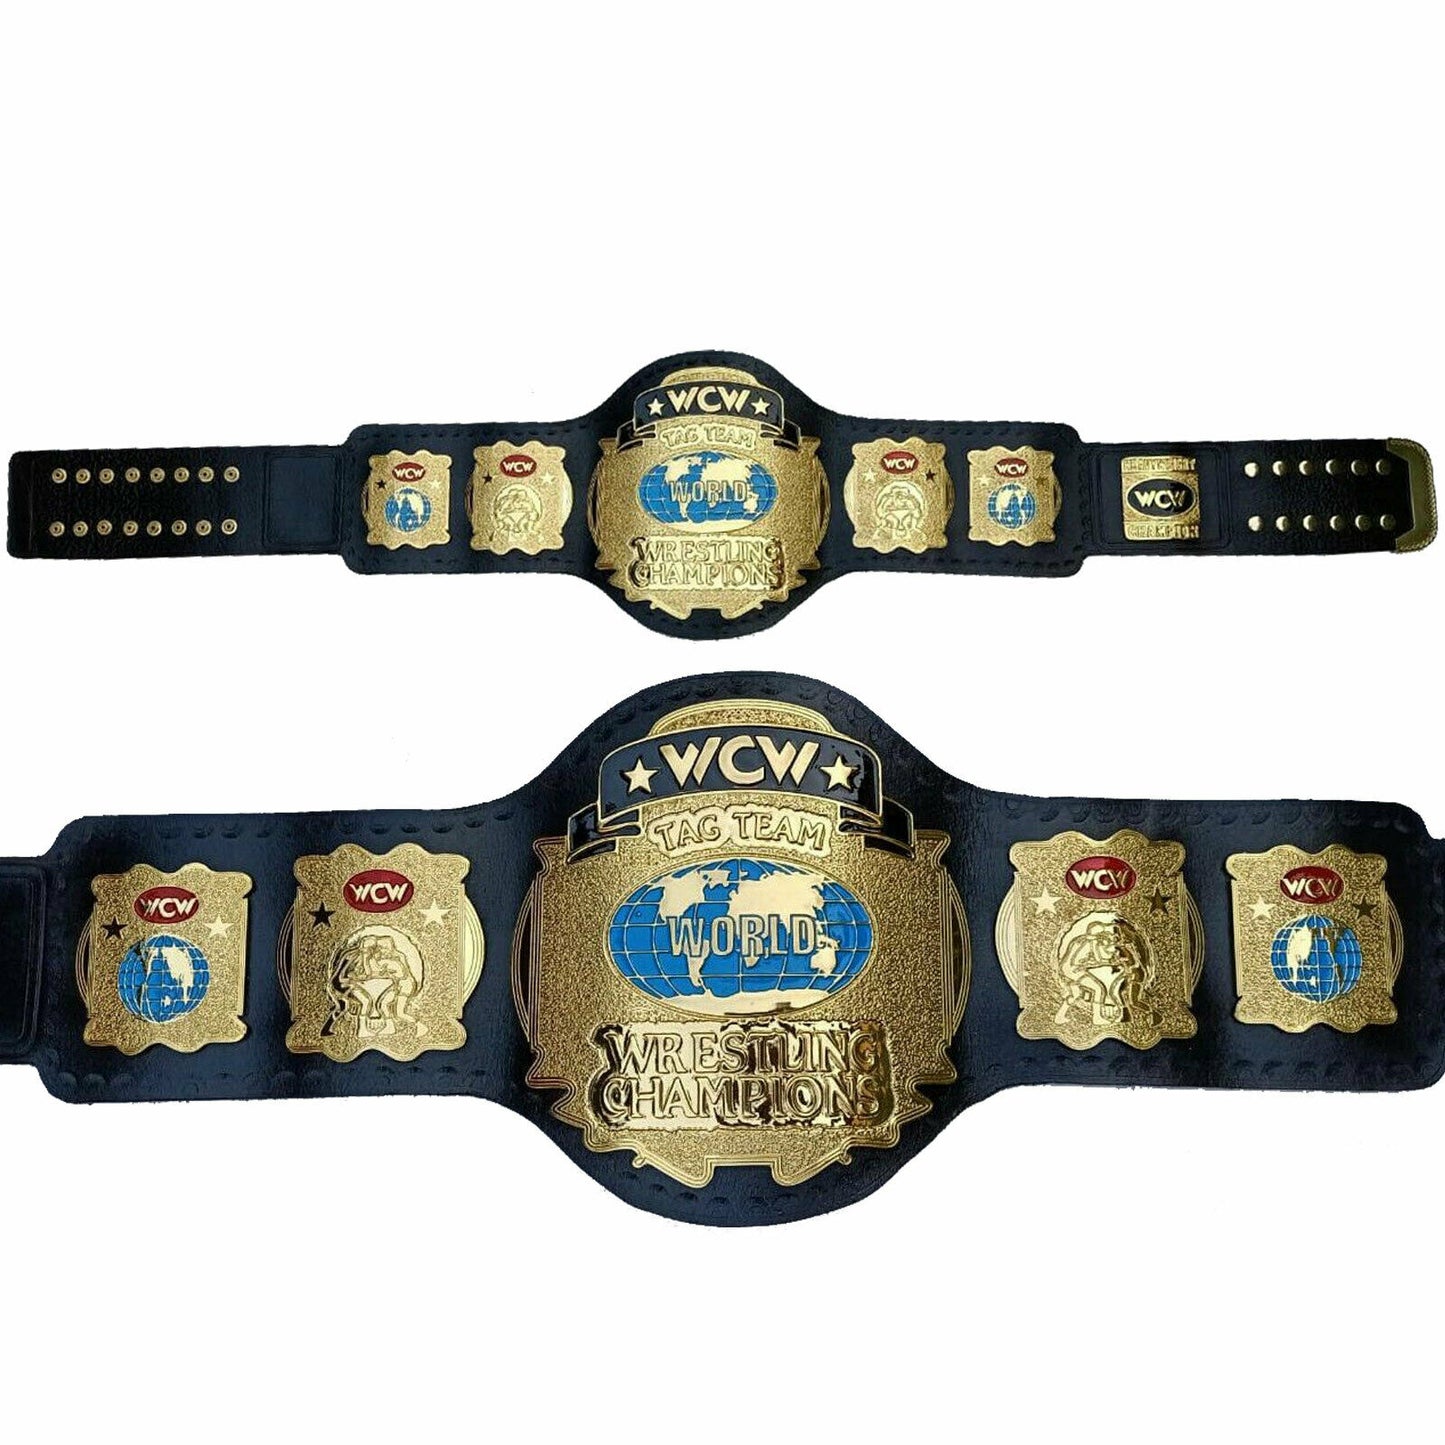 WCW WORLD TAG TEAM Wrestling Championship Title Belt